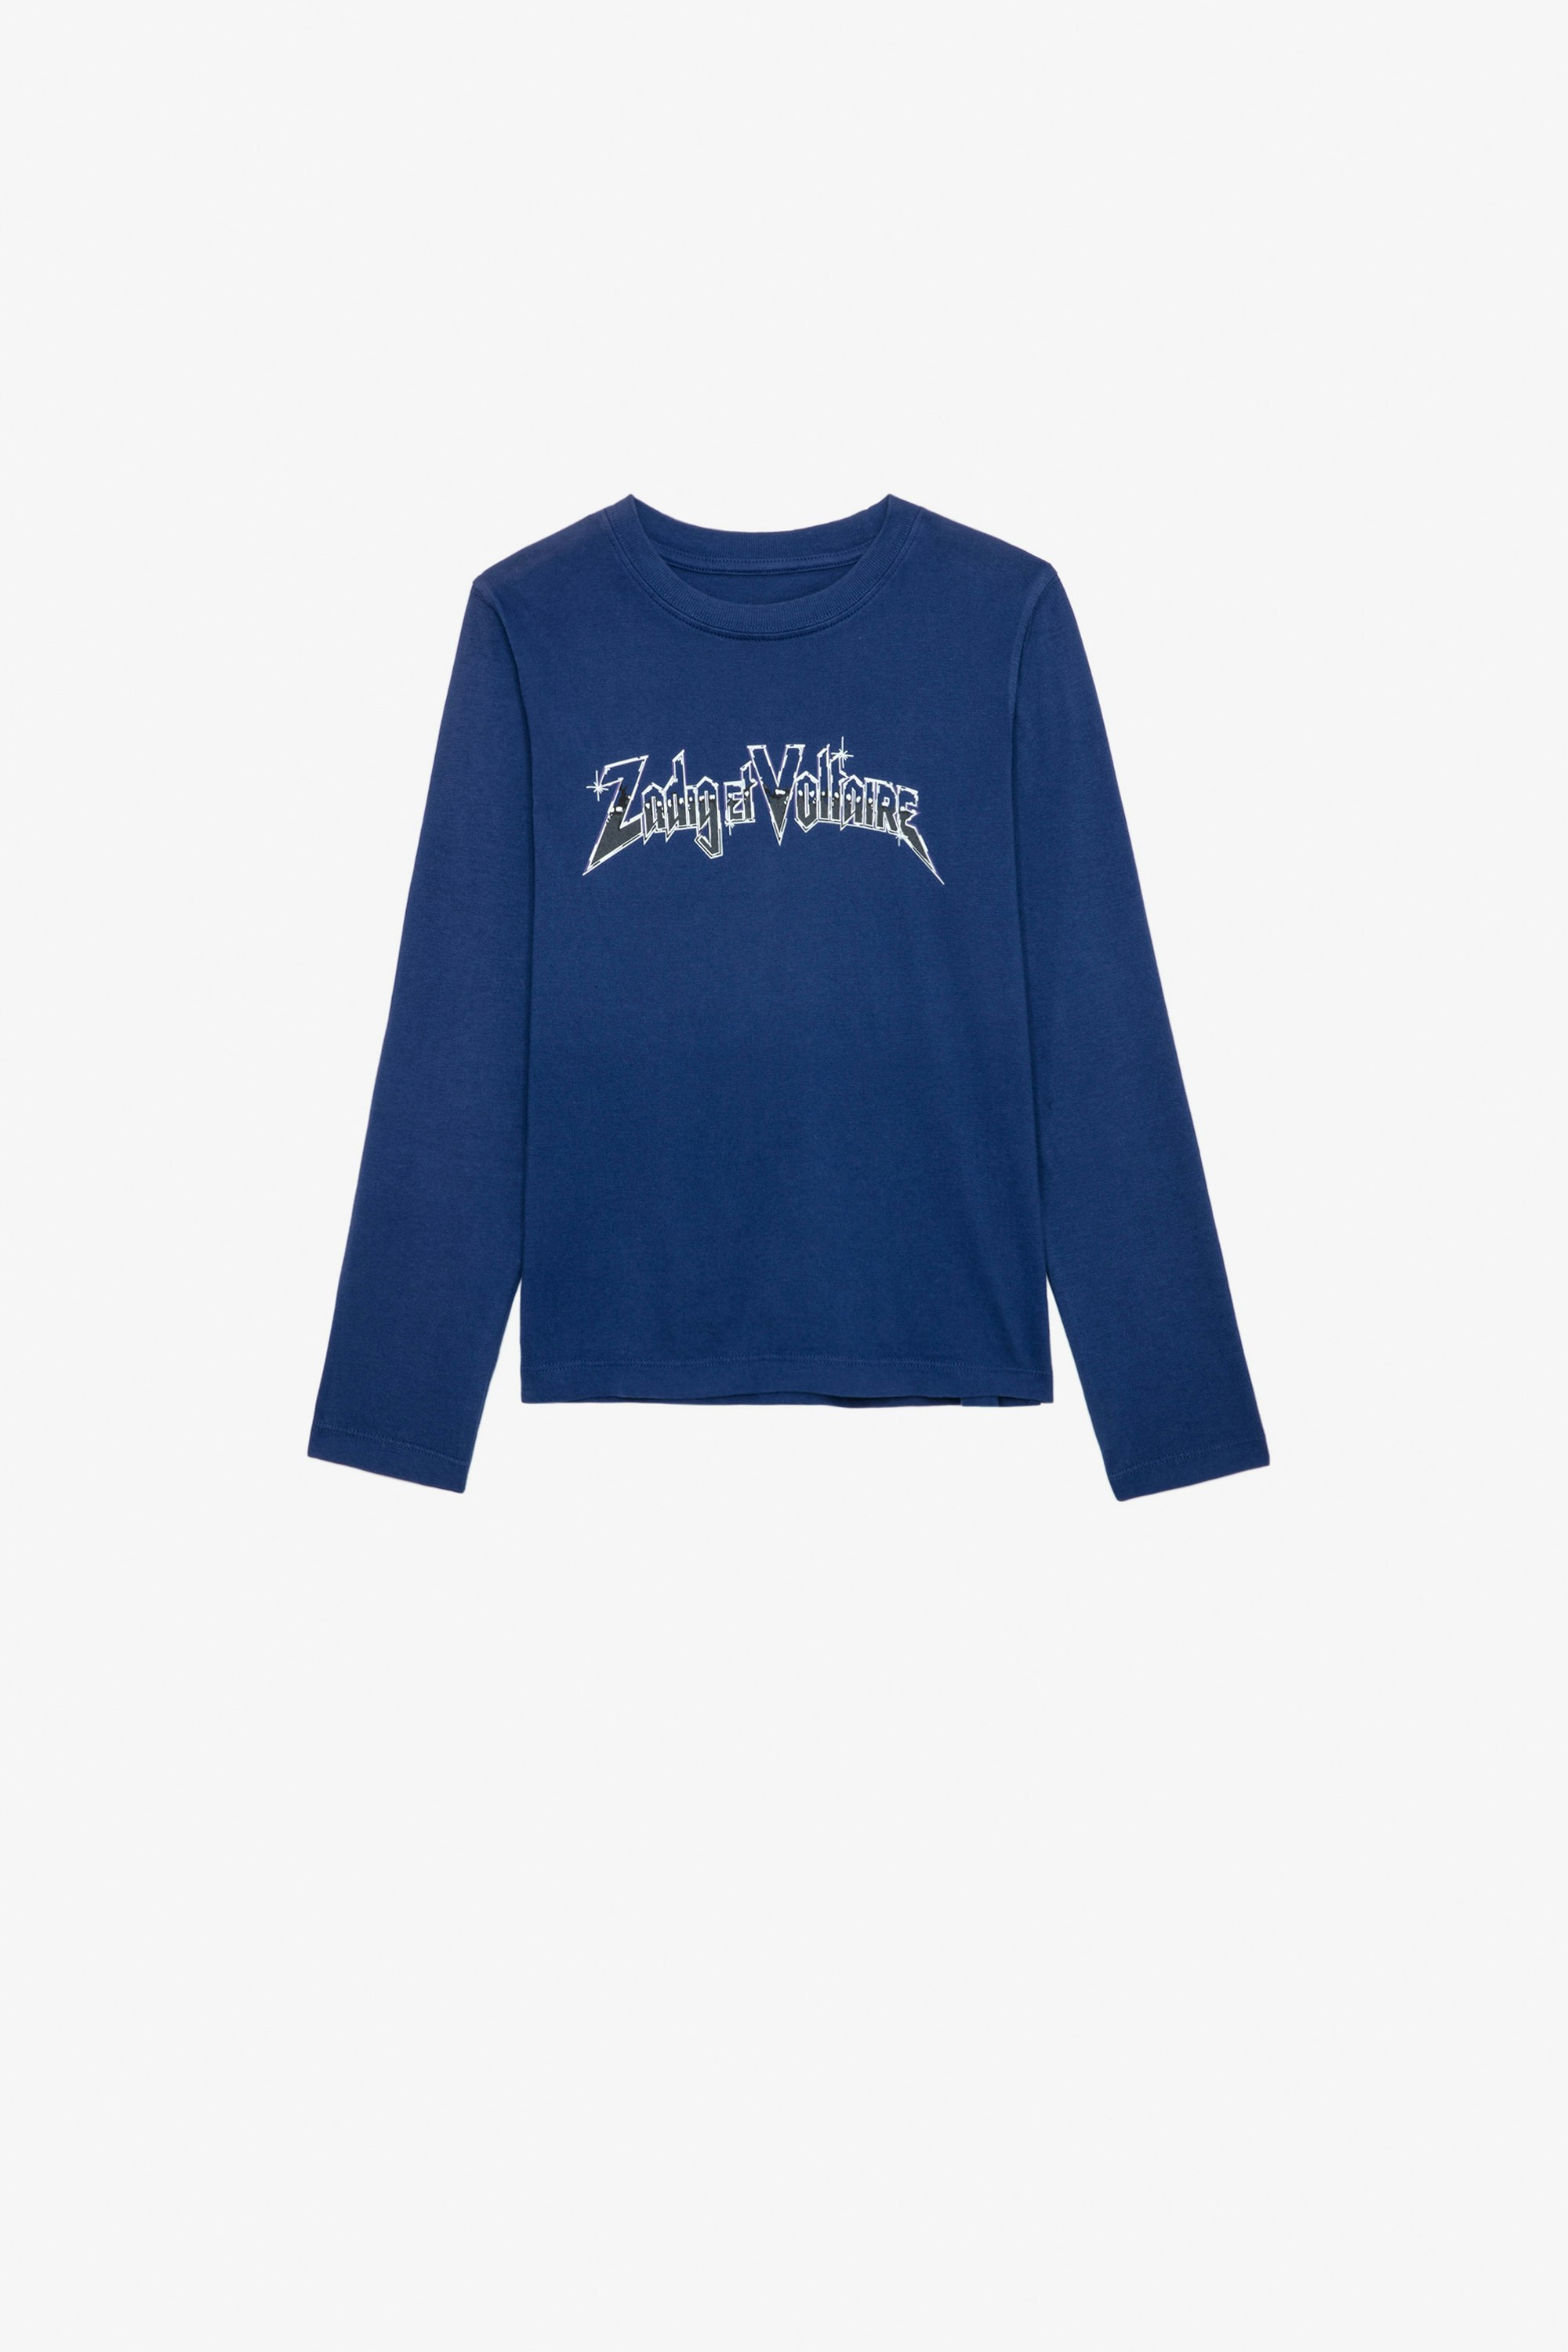 Kita Boys’ T-Shirt - Boys’ blue long-sleeved cotton jersey T-shirt with prints.